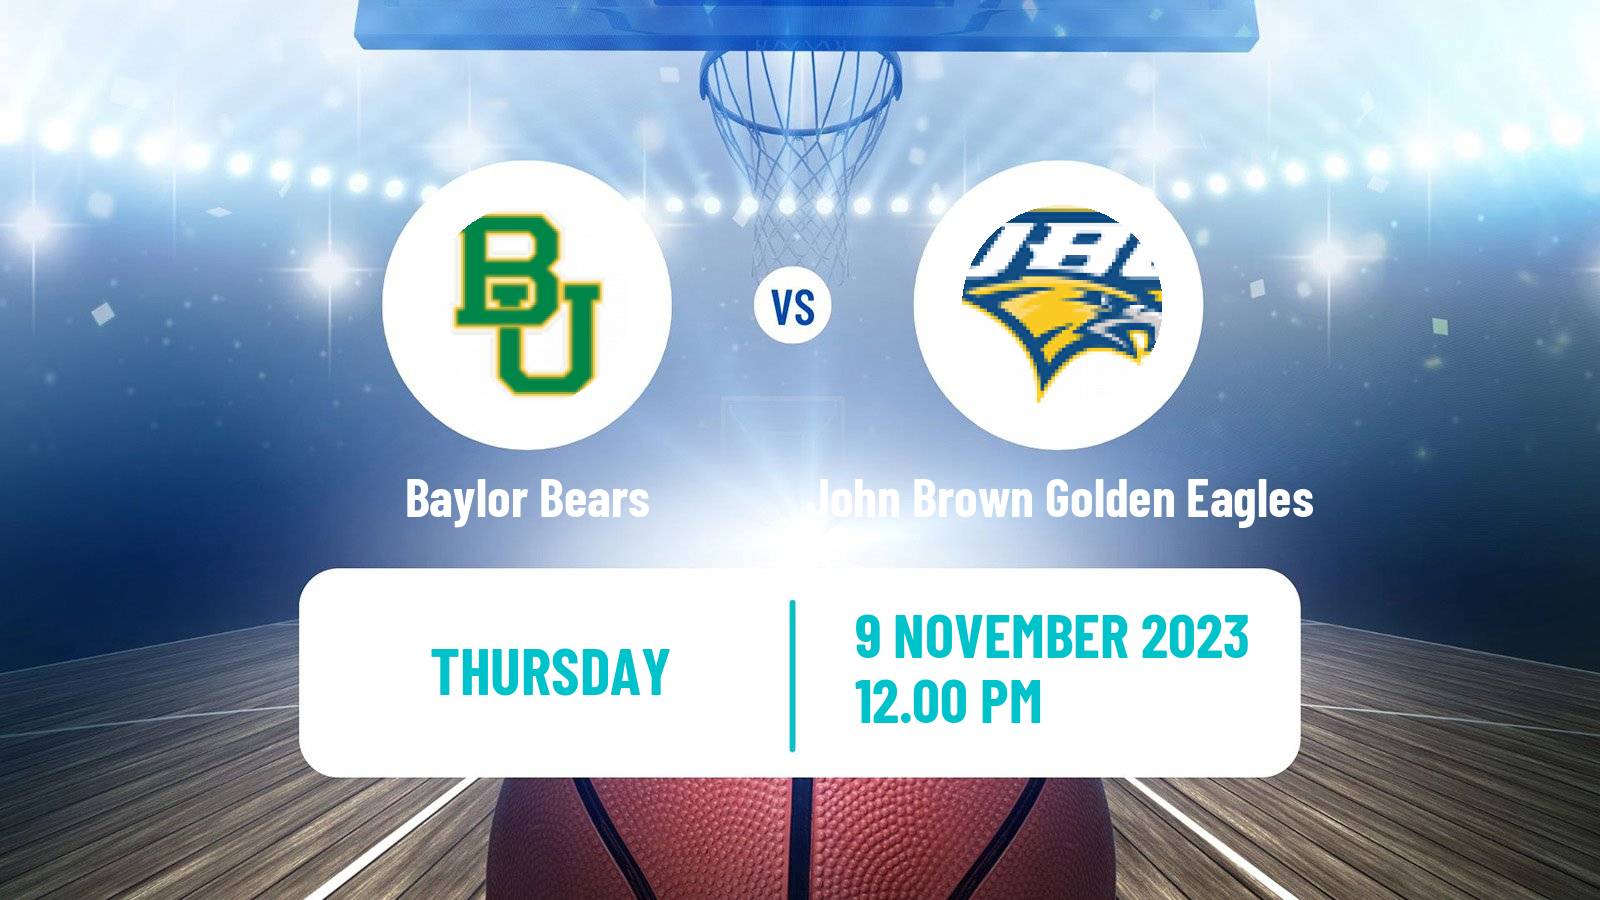 Basketball NCAA College Basketball Baylor Bears - John Brown Golden Eagles